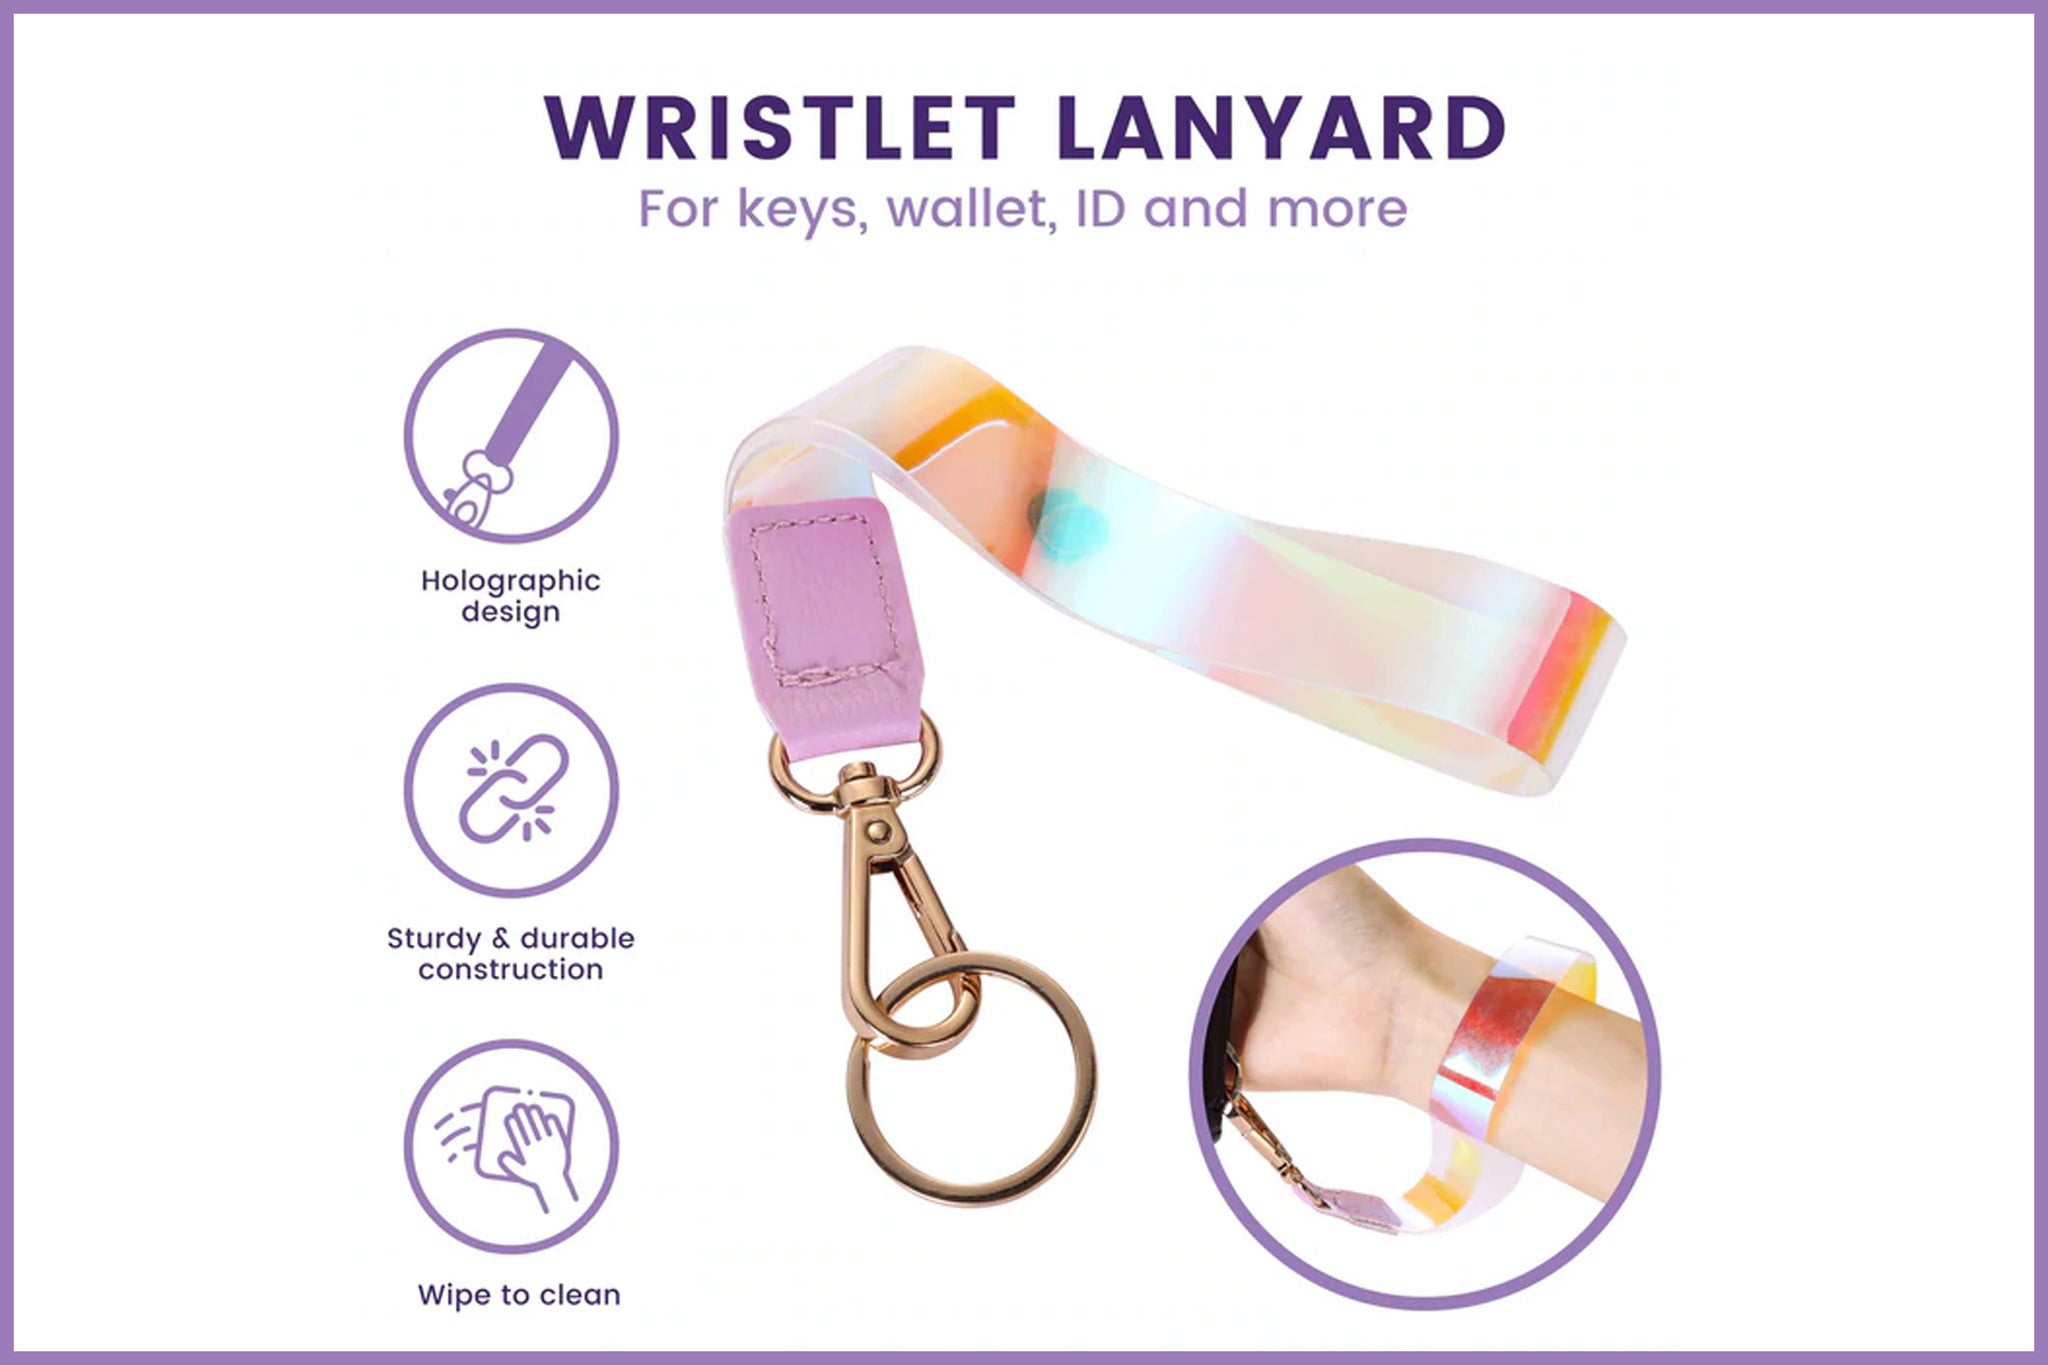 Wrist Lanyard for Keys